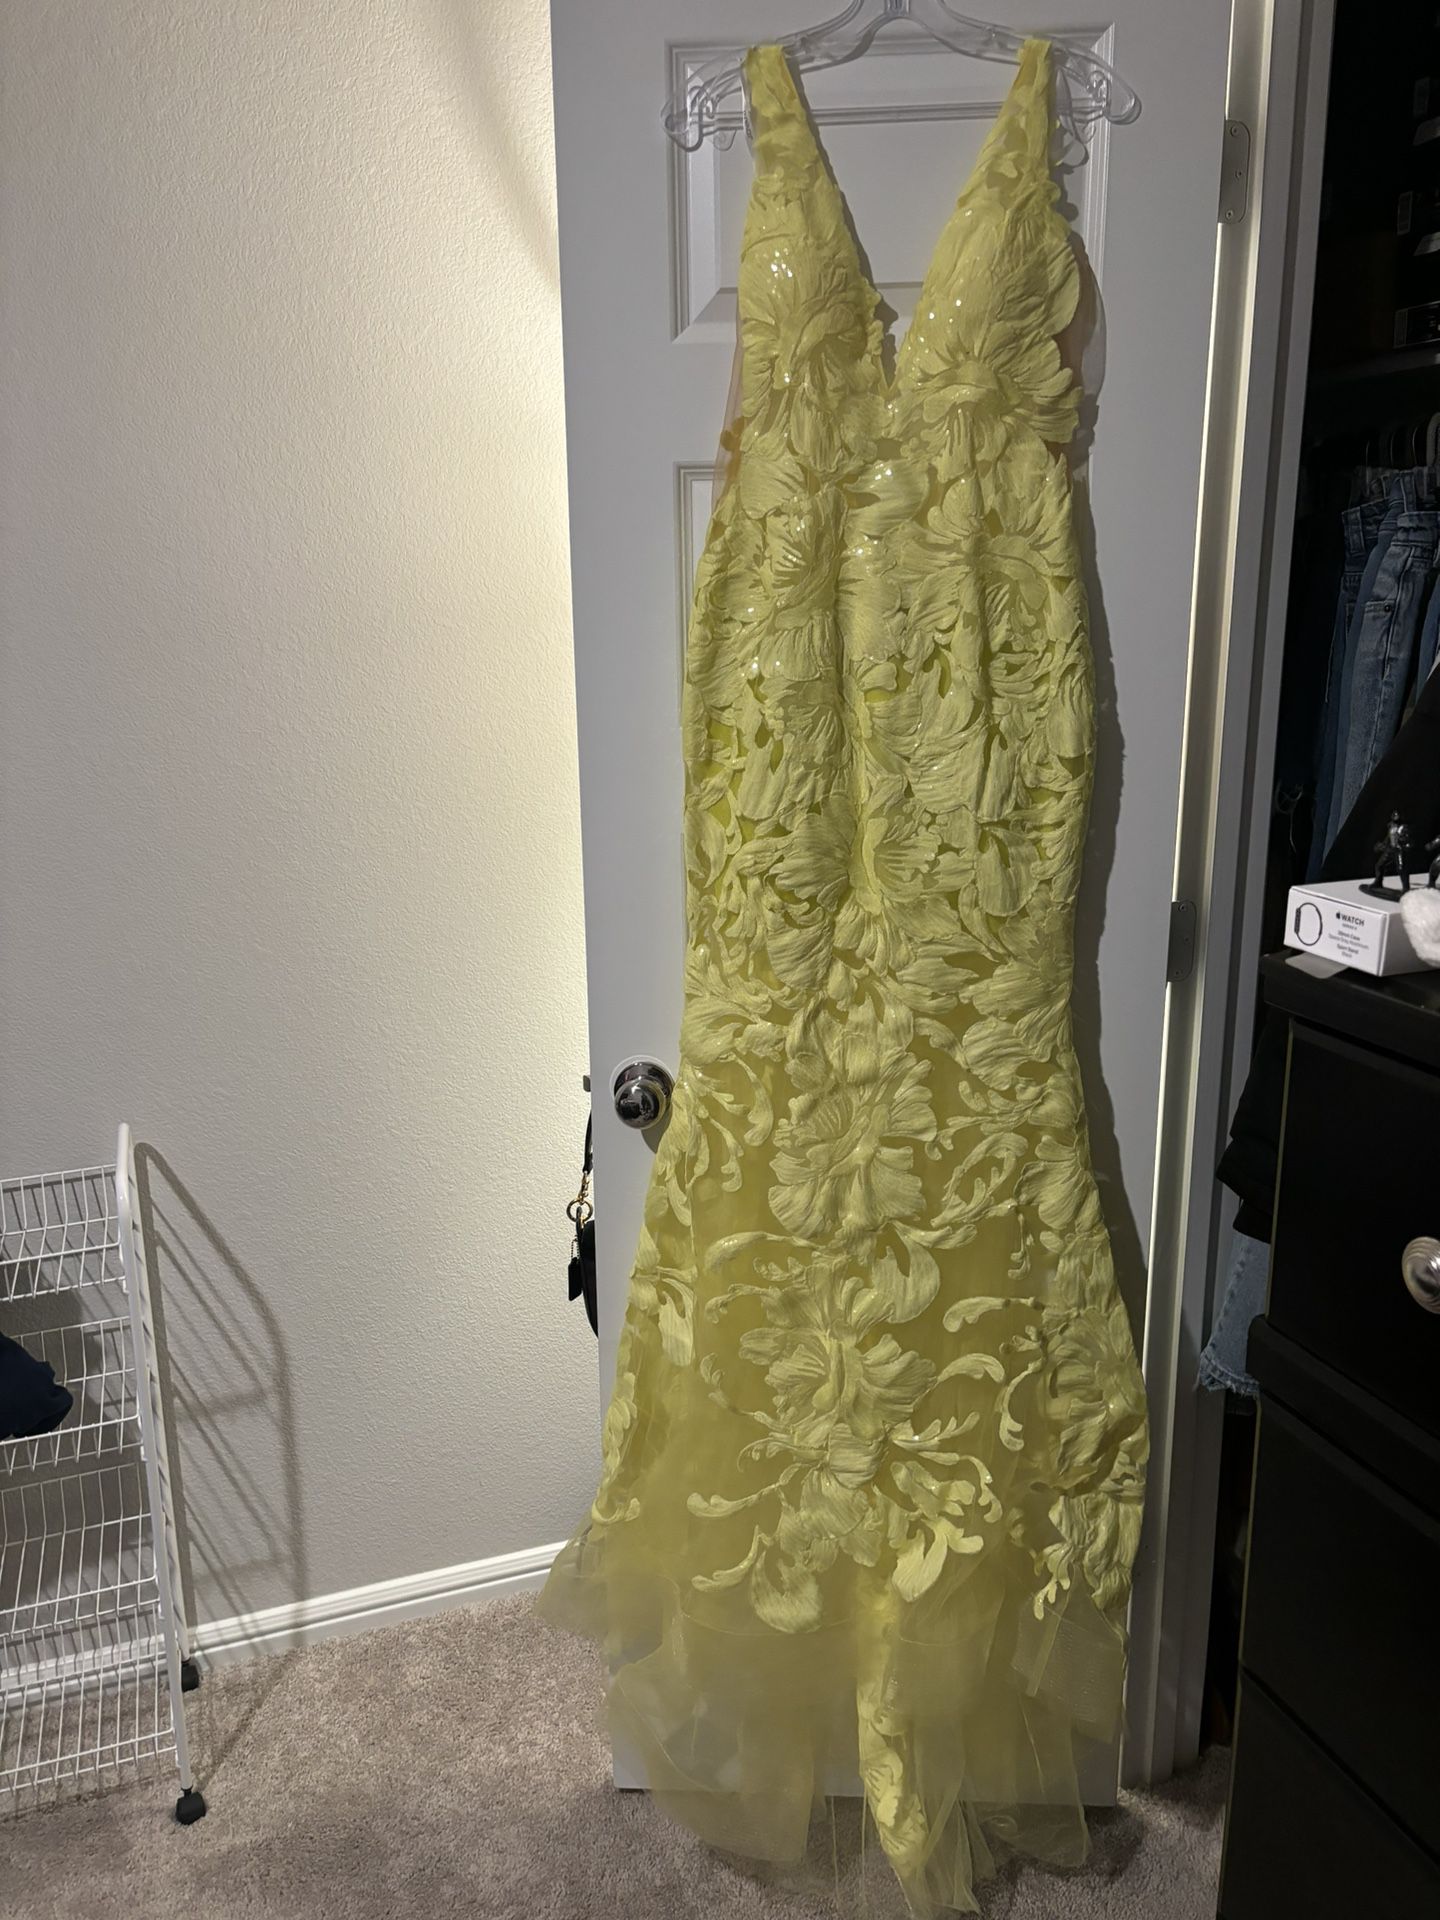 Yellow prom dress